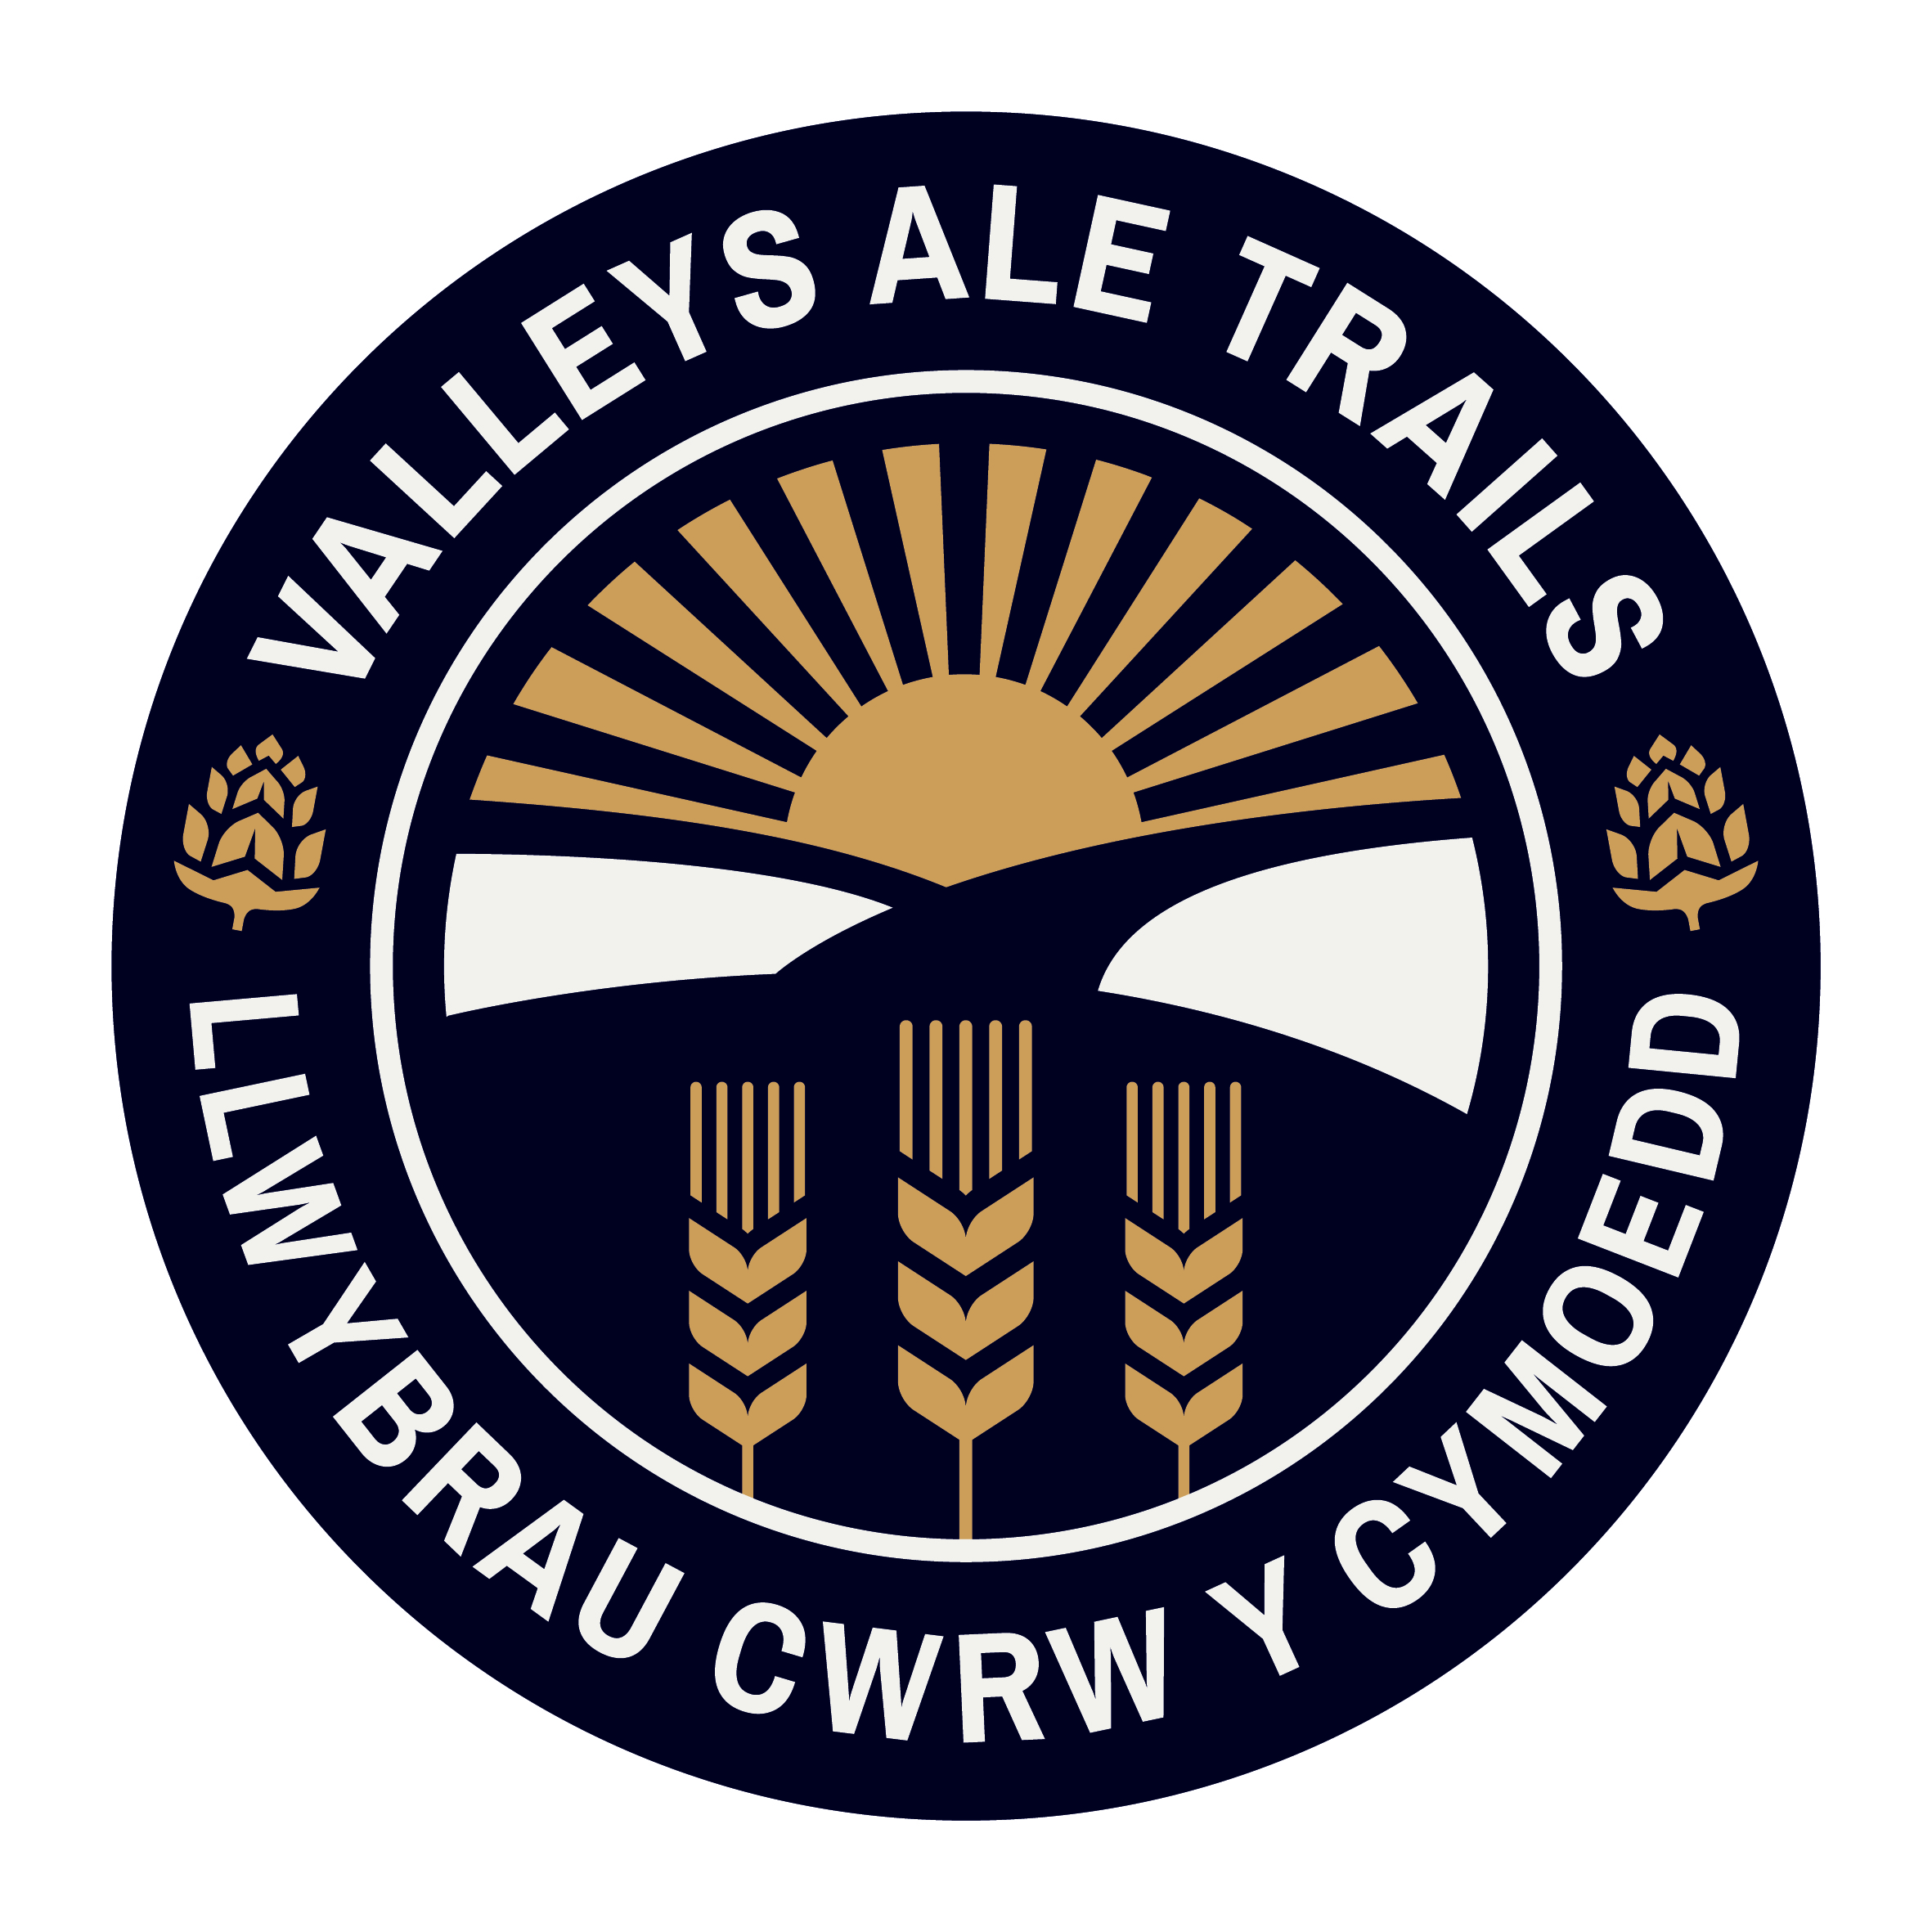 Valleys Ale Trails logo